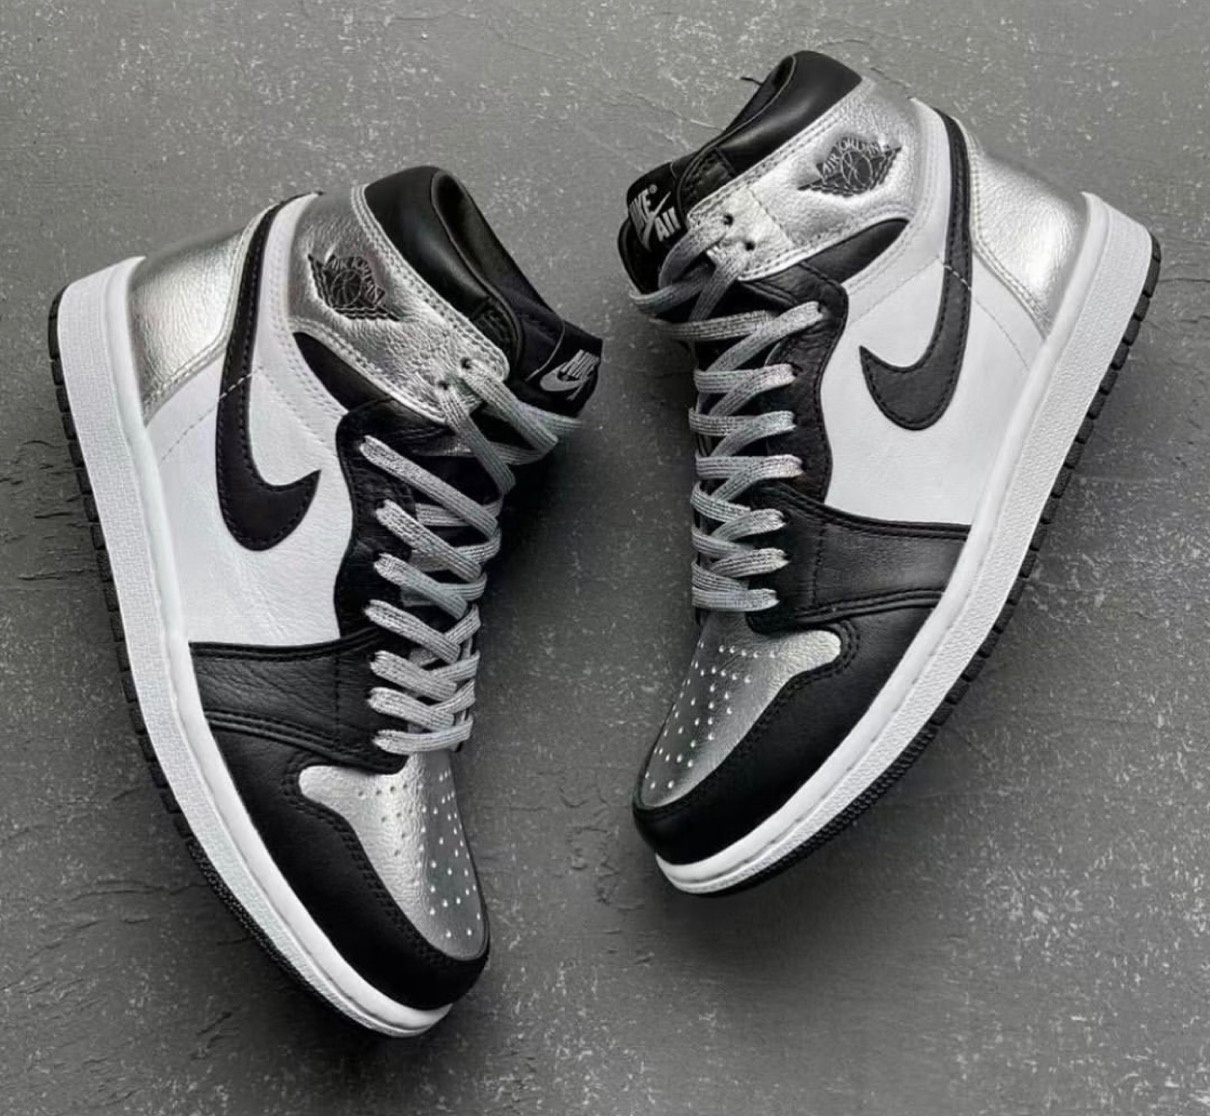 Nike】Wmns Air Jordan 1 Retro High OG “Silver Toe”が国内2月12日に ...